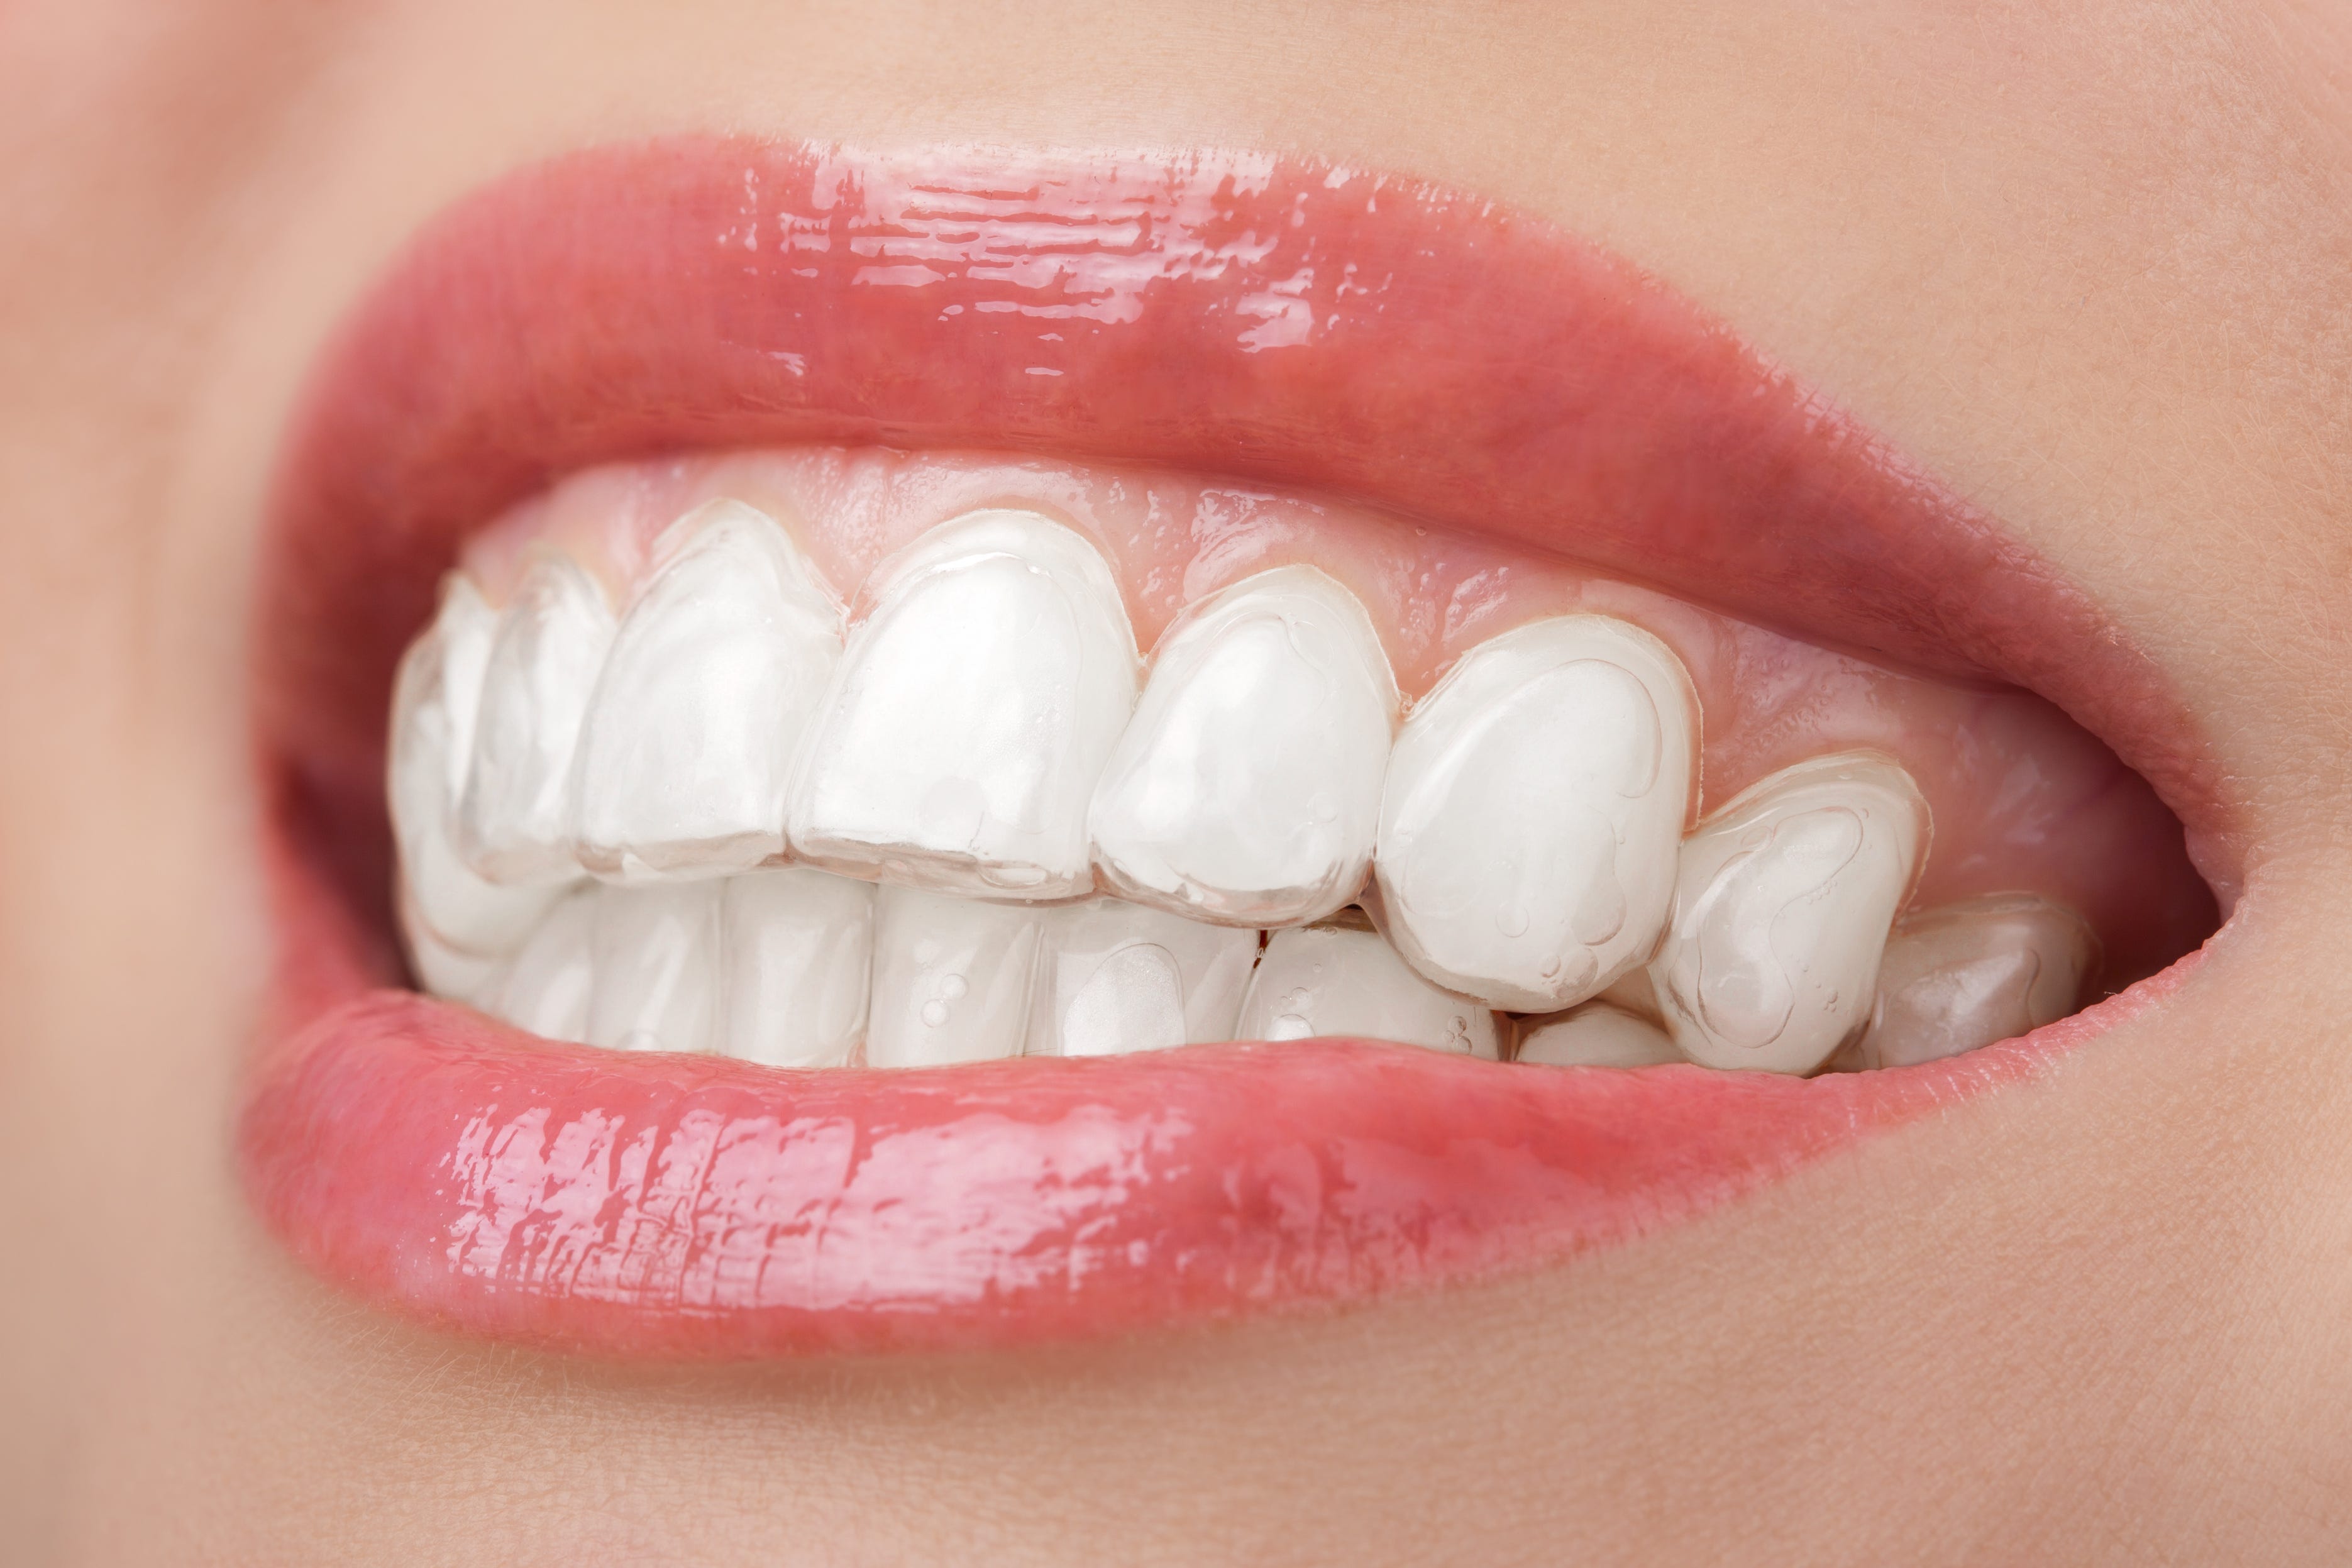 Appareil dentaire invisible : comment prendre soin de mes aligneurs  dentaires transparents ? | by Orthlane | Medium